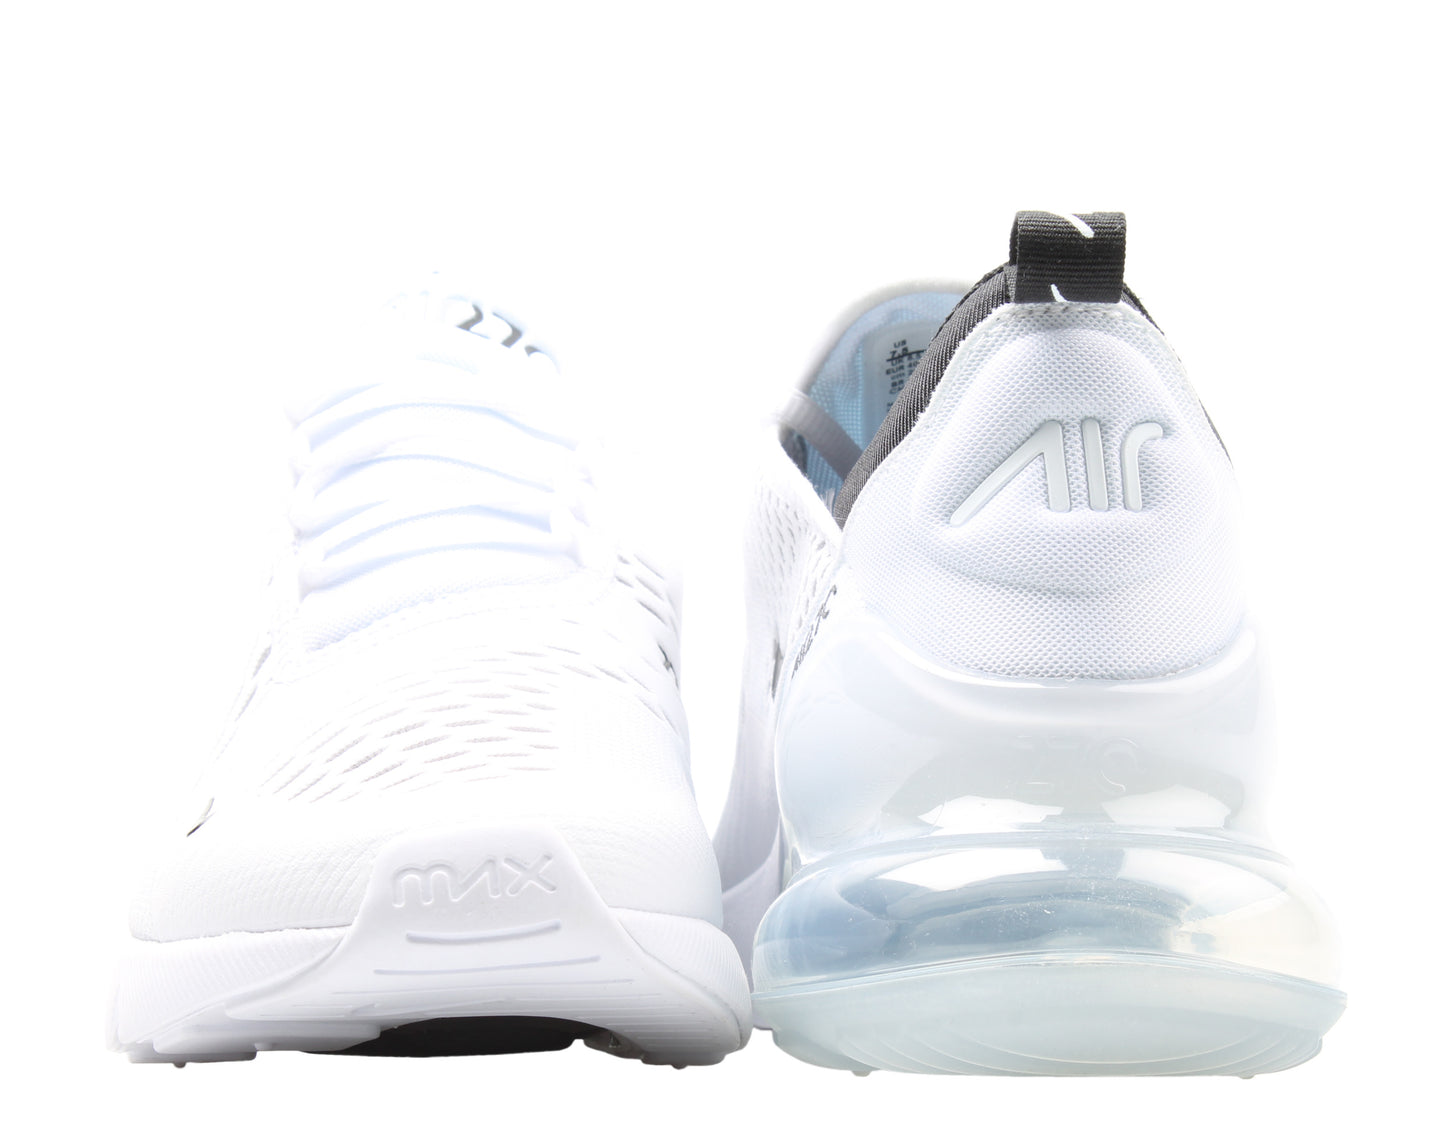 Nike Air Max 270 White/Black-White Men's Lifestyle Shoes AH8050-100